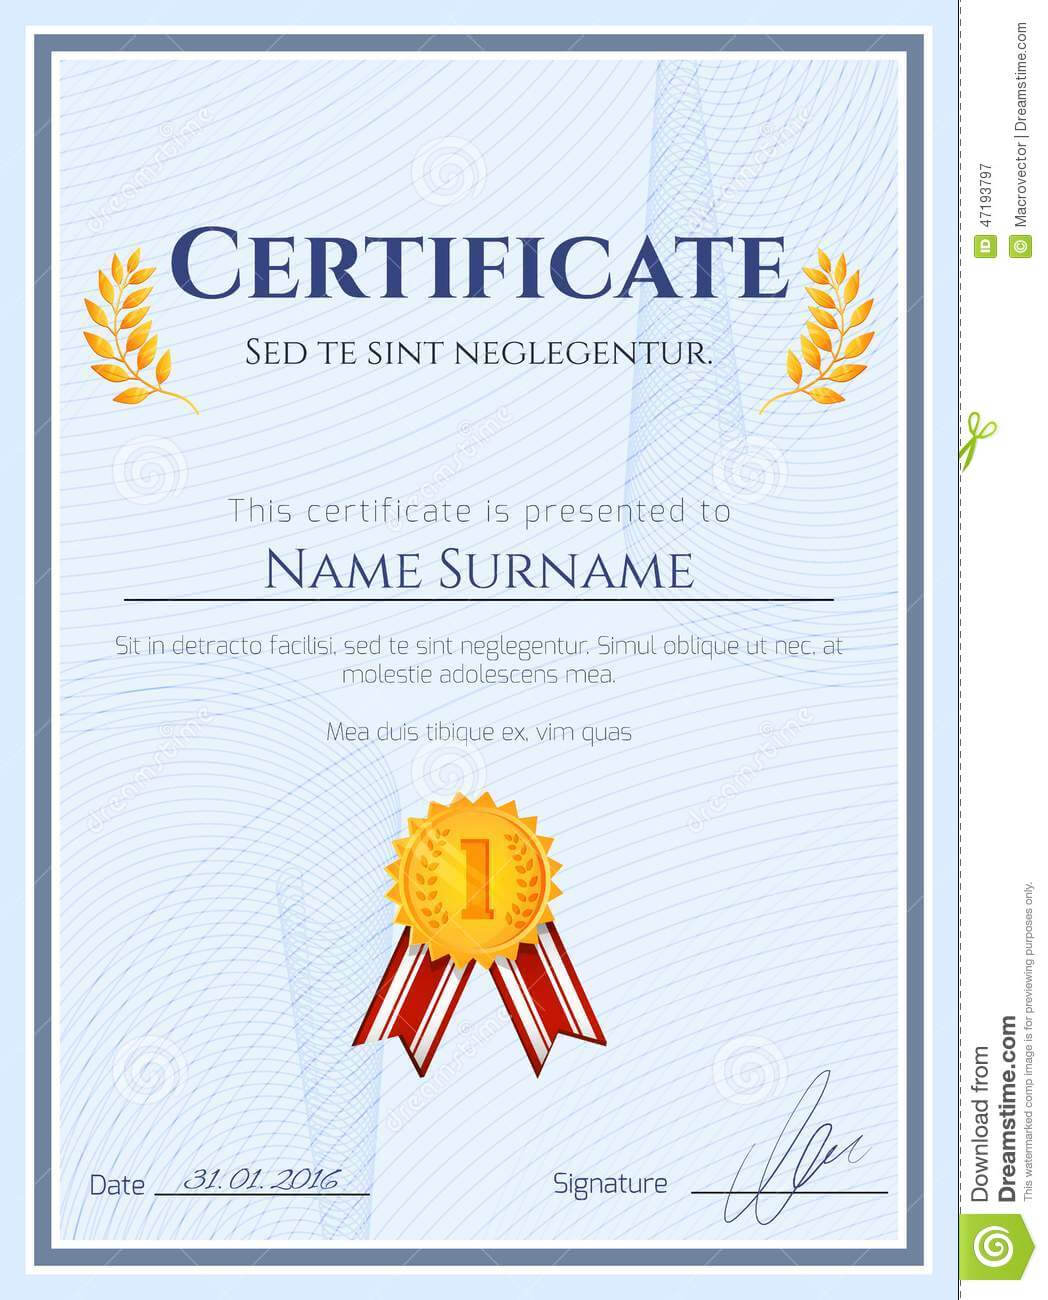 Certificate Template Winner | Health Care Assistant Resume Within Winner Certificate Template